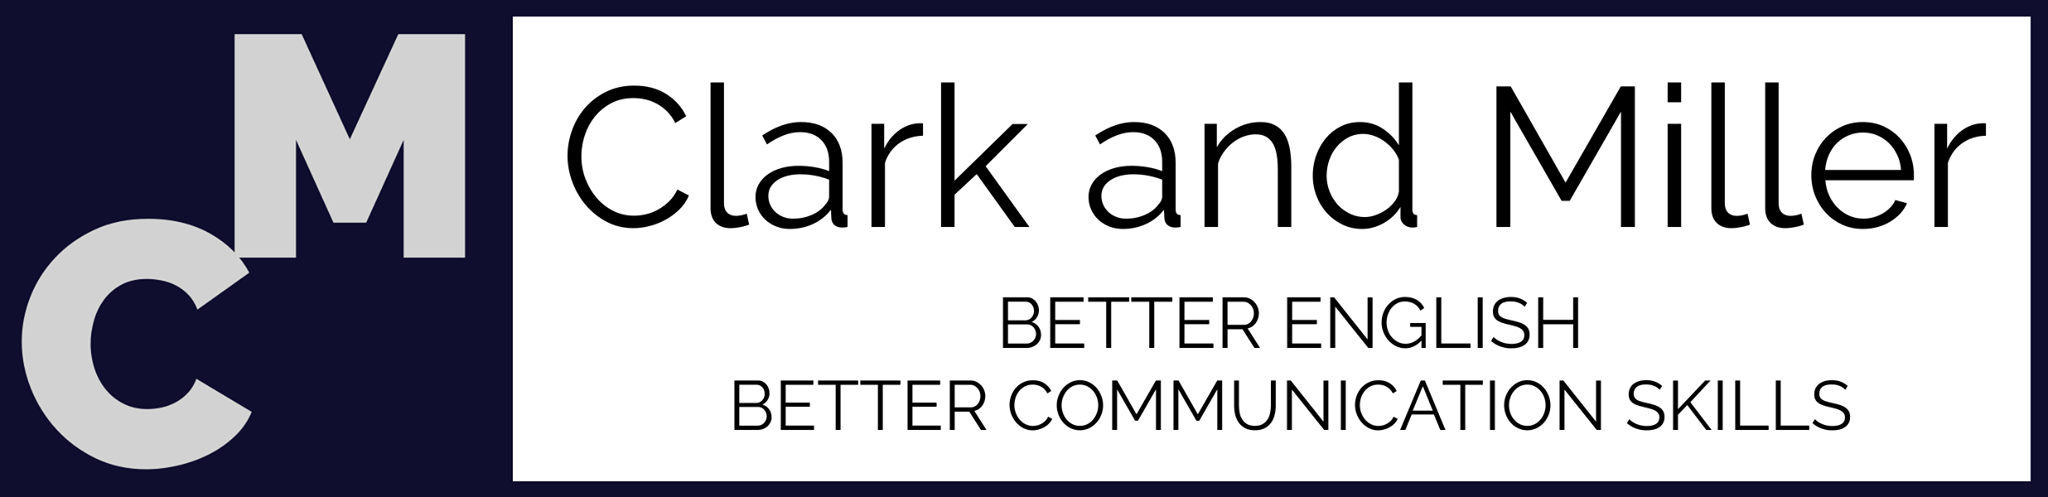 Clark and Miller logo 